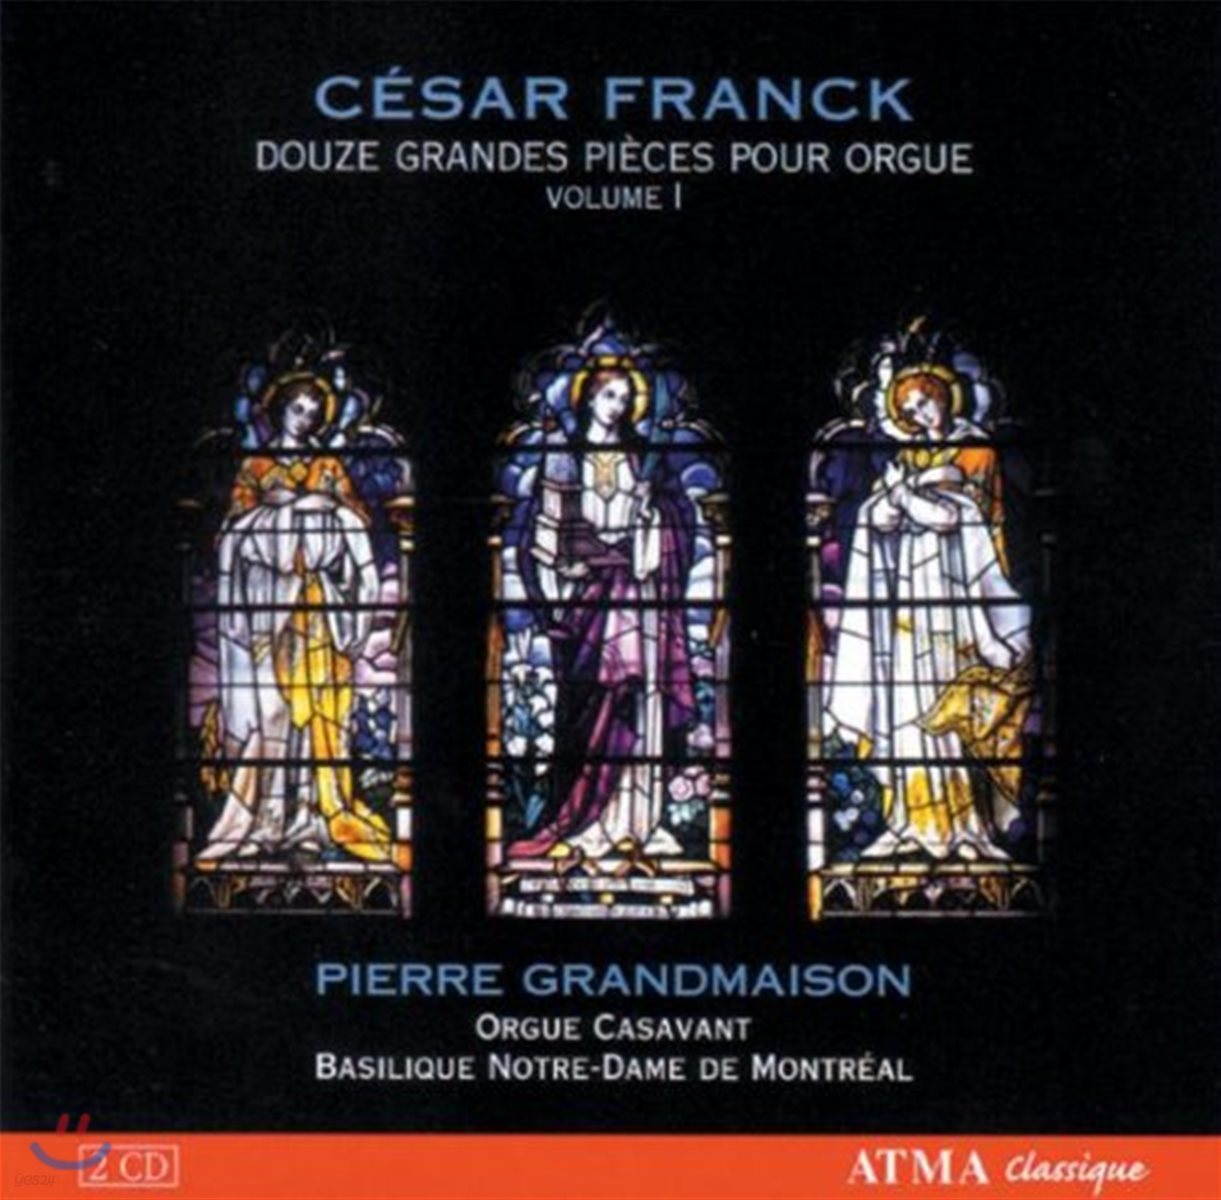 Pierre Grandmaison 프랑크: 오르간을 위한 12개의 작품집 1권 (Franck: Douze Grandes Pieces pour Orgue Volume I)